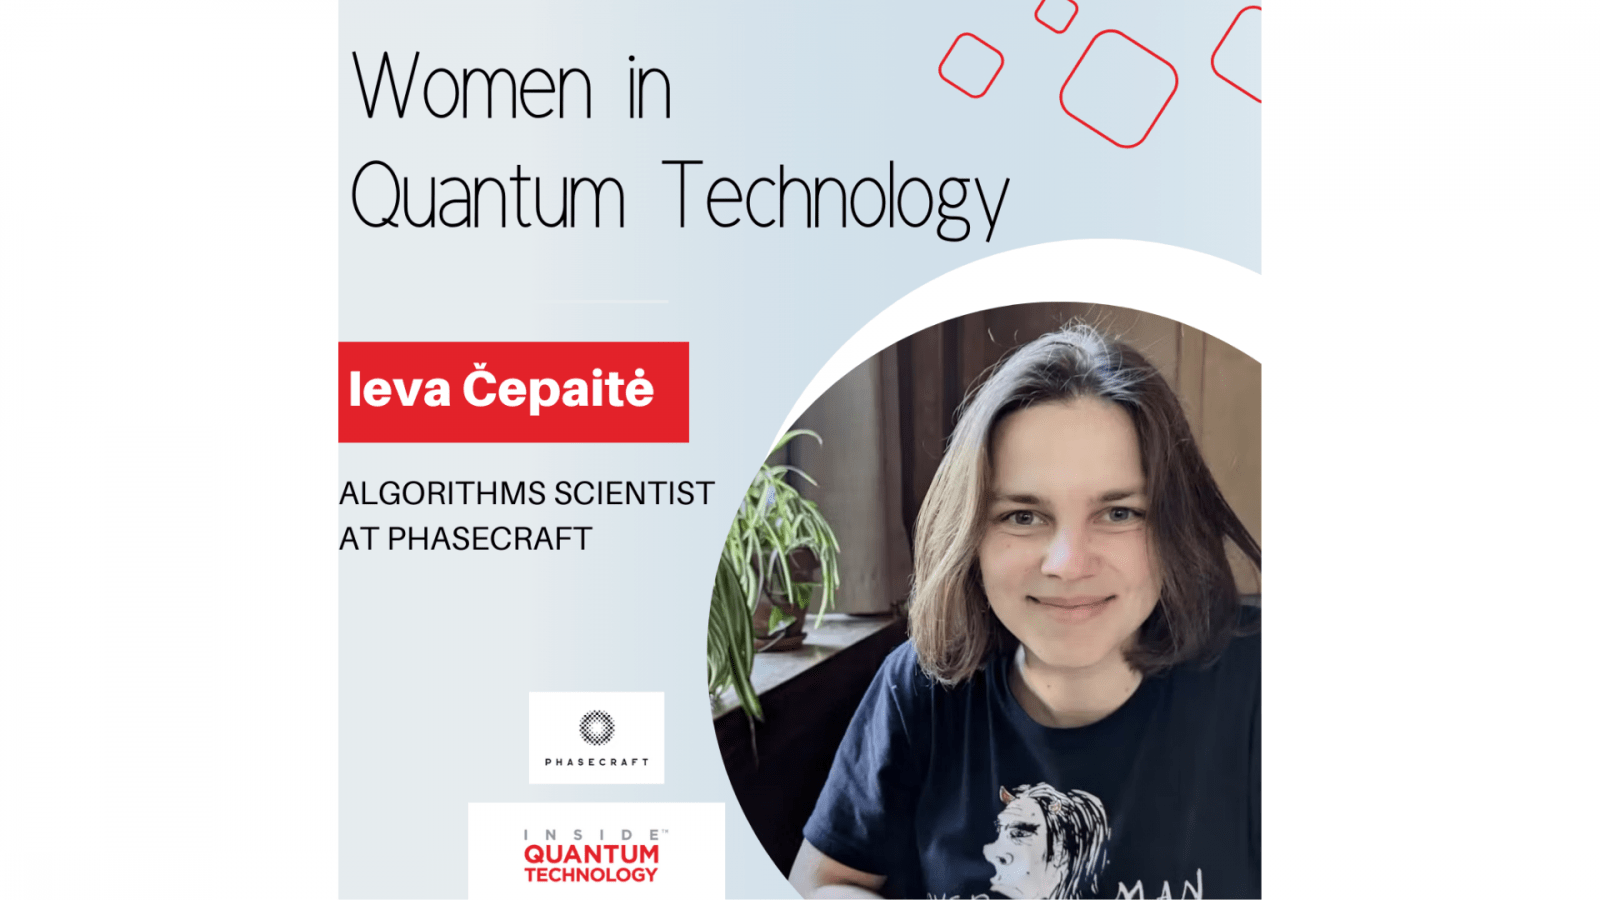 Ieva Čepaitė, Quantum Algorithms Scientist at Phasecraft, shares the story of her journey into the quantum ecosystem.